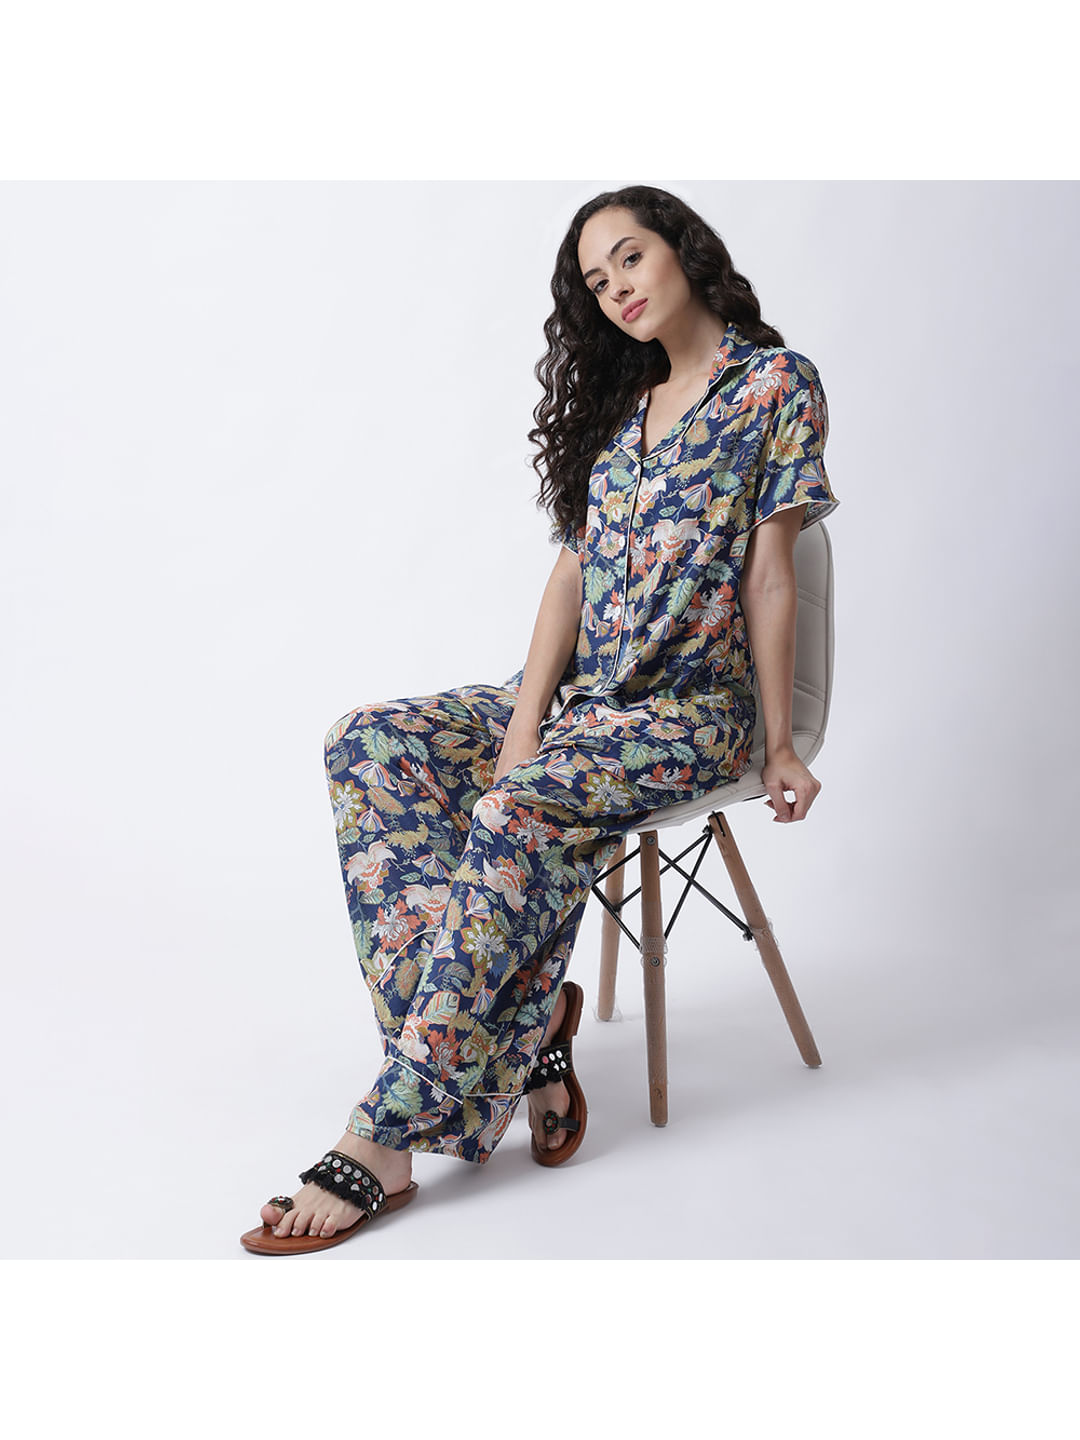 Rayon Blue Botanical Printed Night Suit set of Shirt & Pyjama trouser